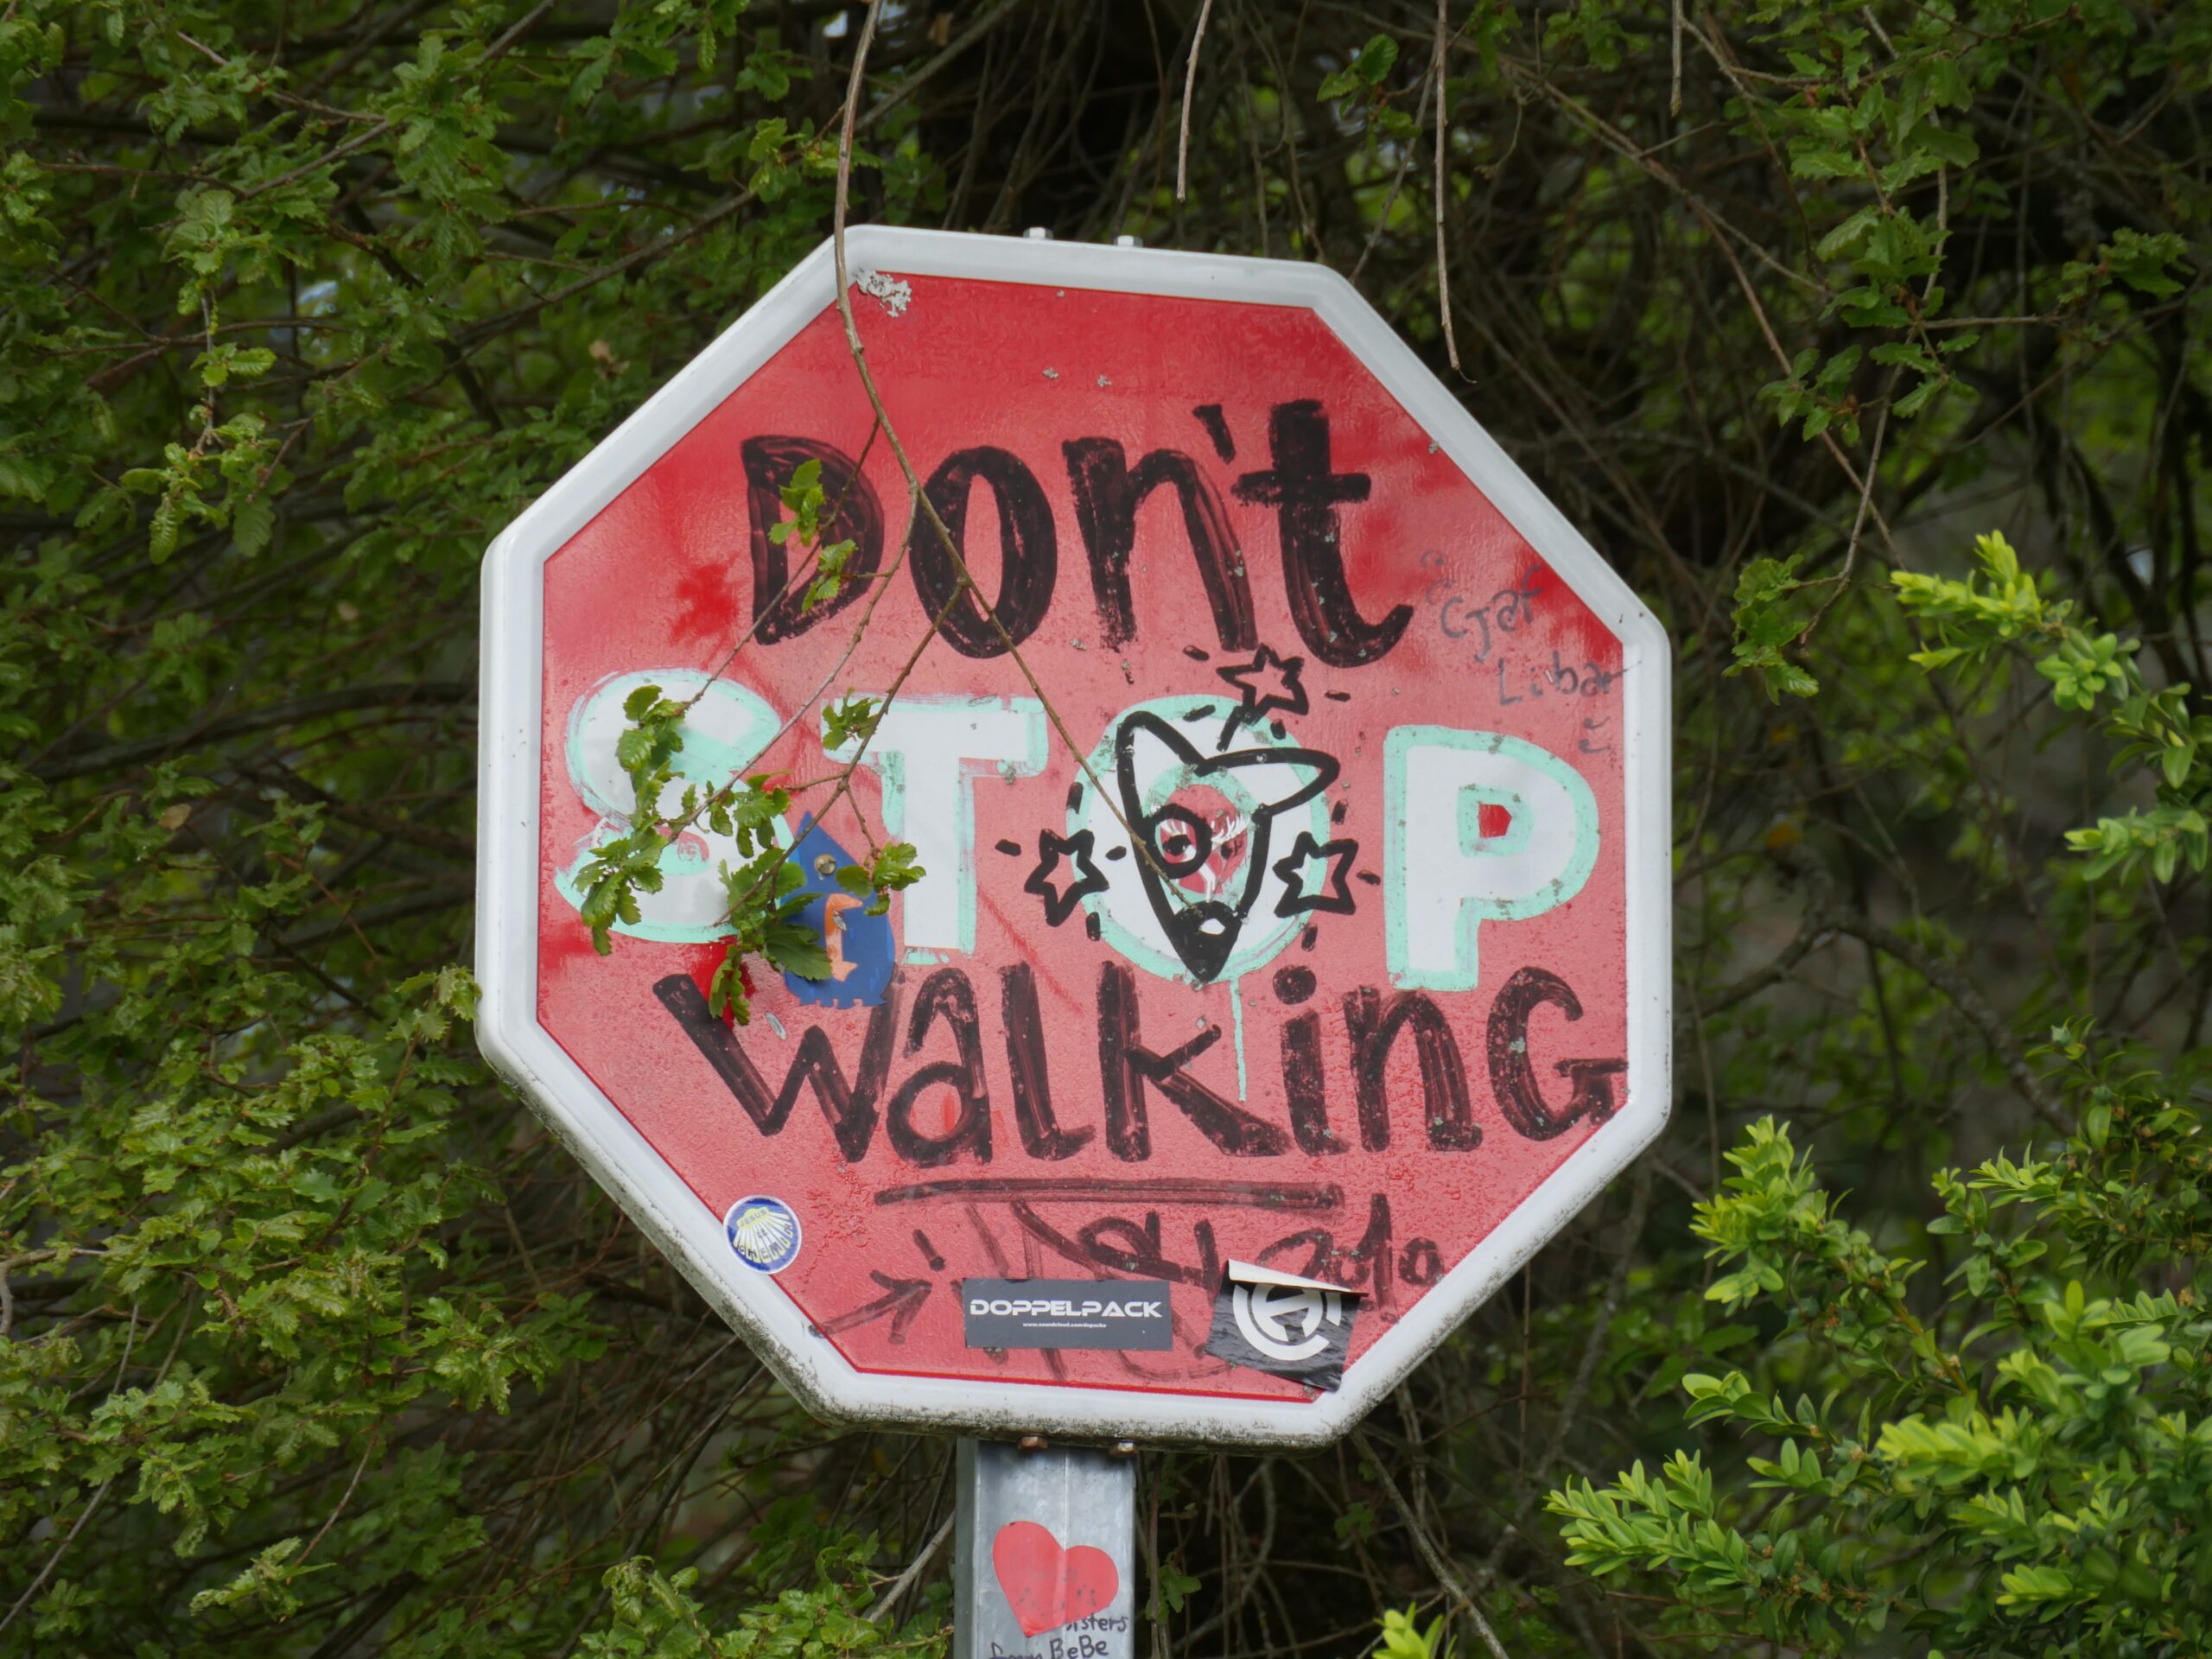 Stop sign graffiti in Spain encourages pilgrims walking the Camino de Santiago.